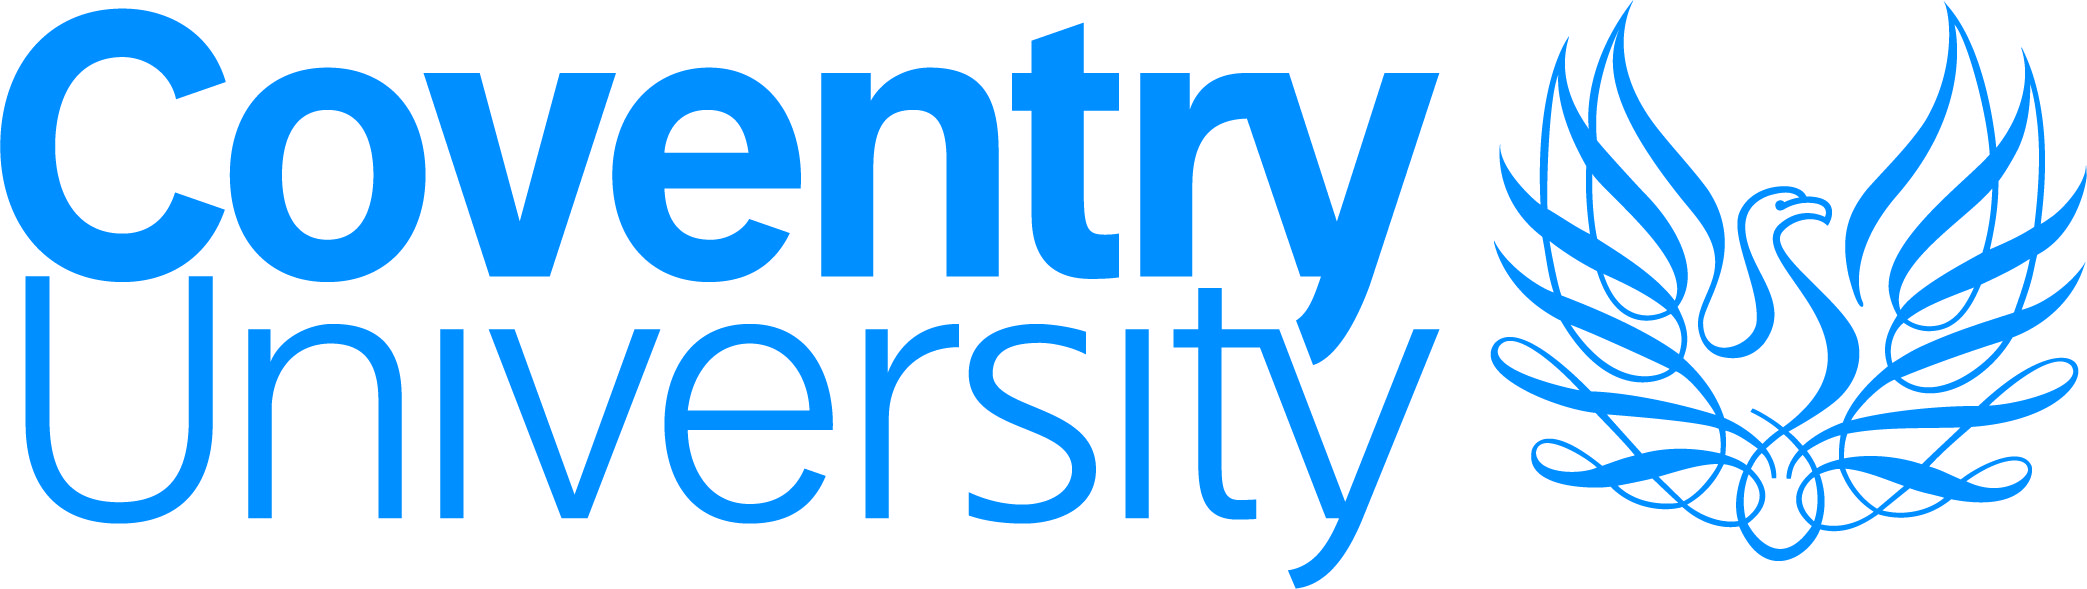 Coventry University Logo landscape BLUE